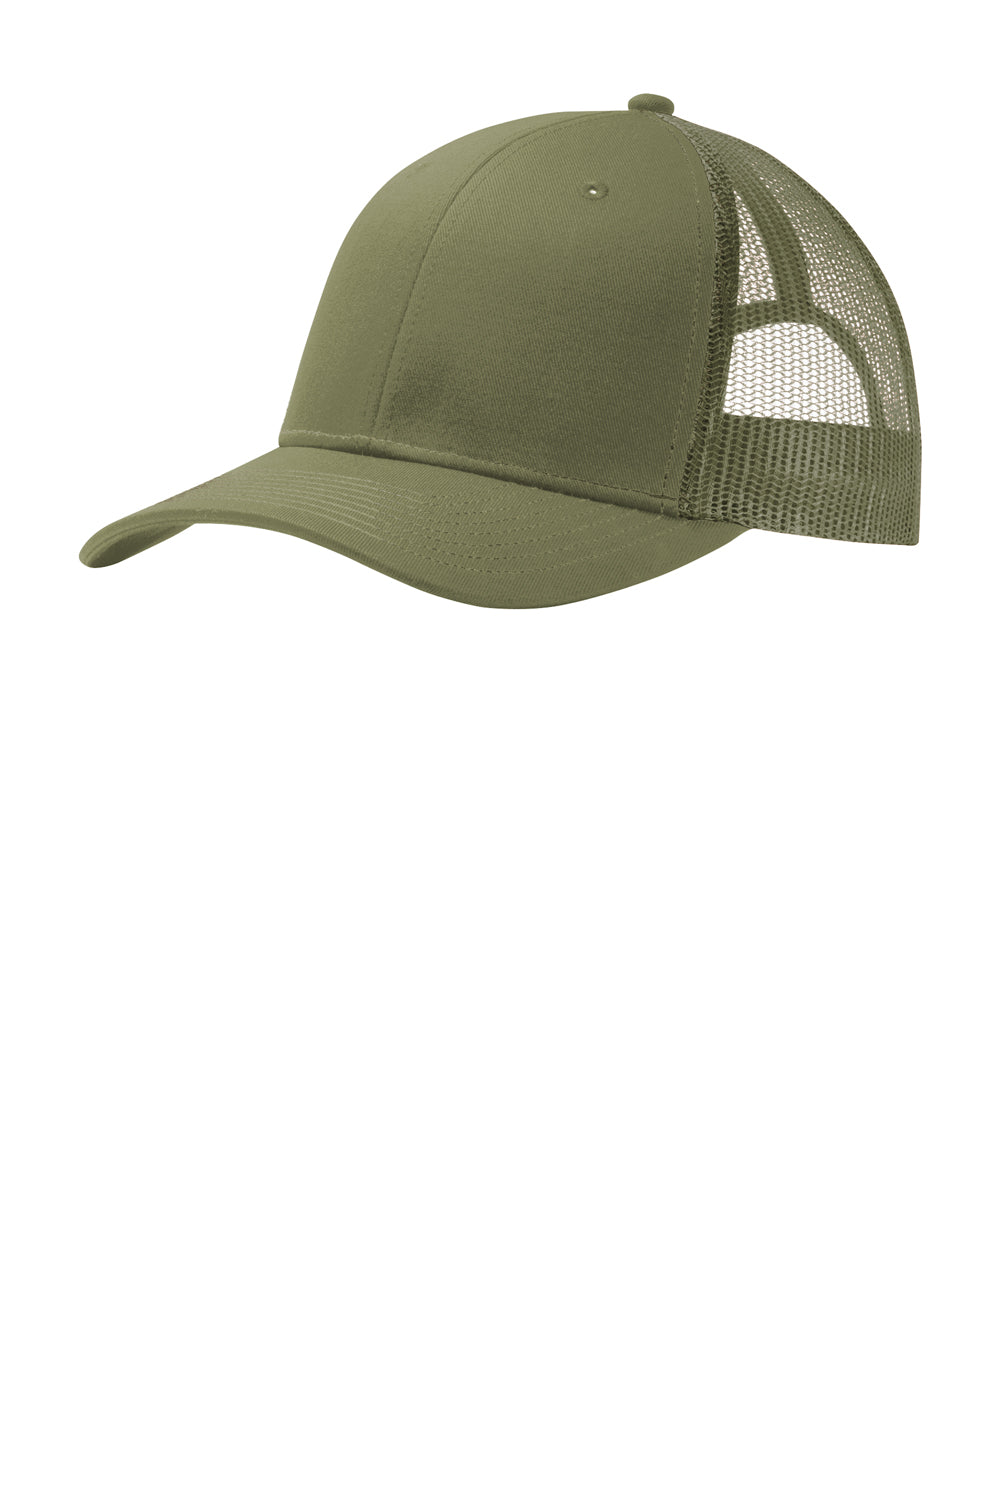 Port Authority Mens Adjustable Trucker Hat Olive Drab Green/Black Front